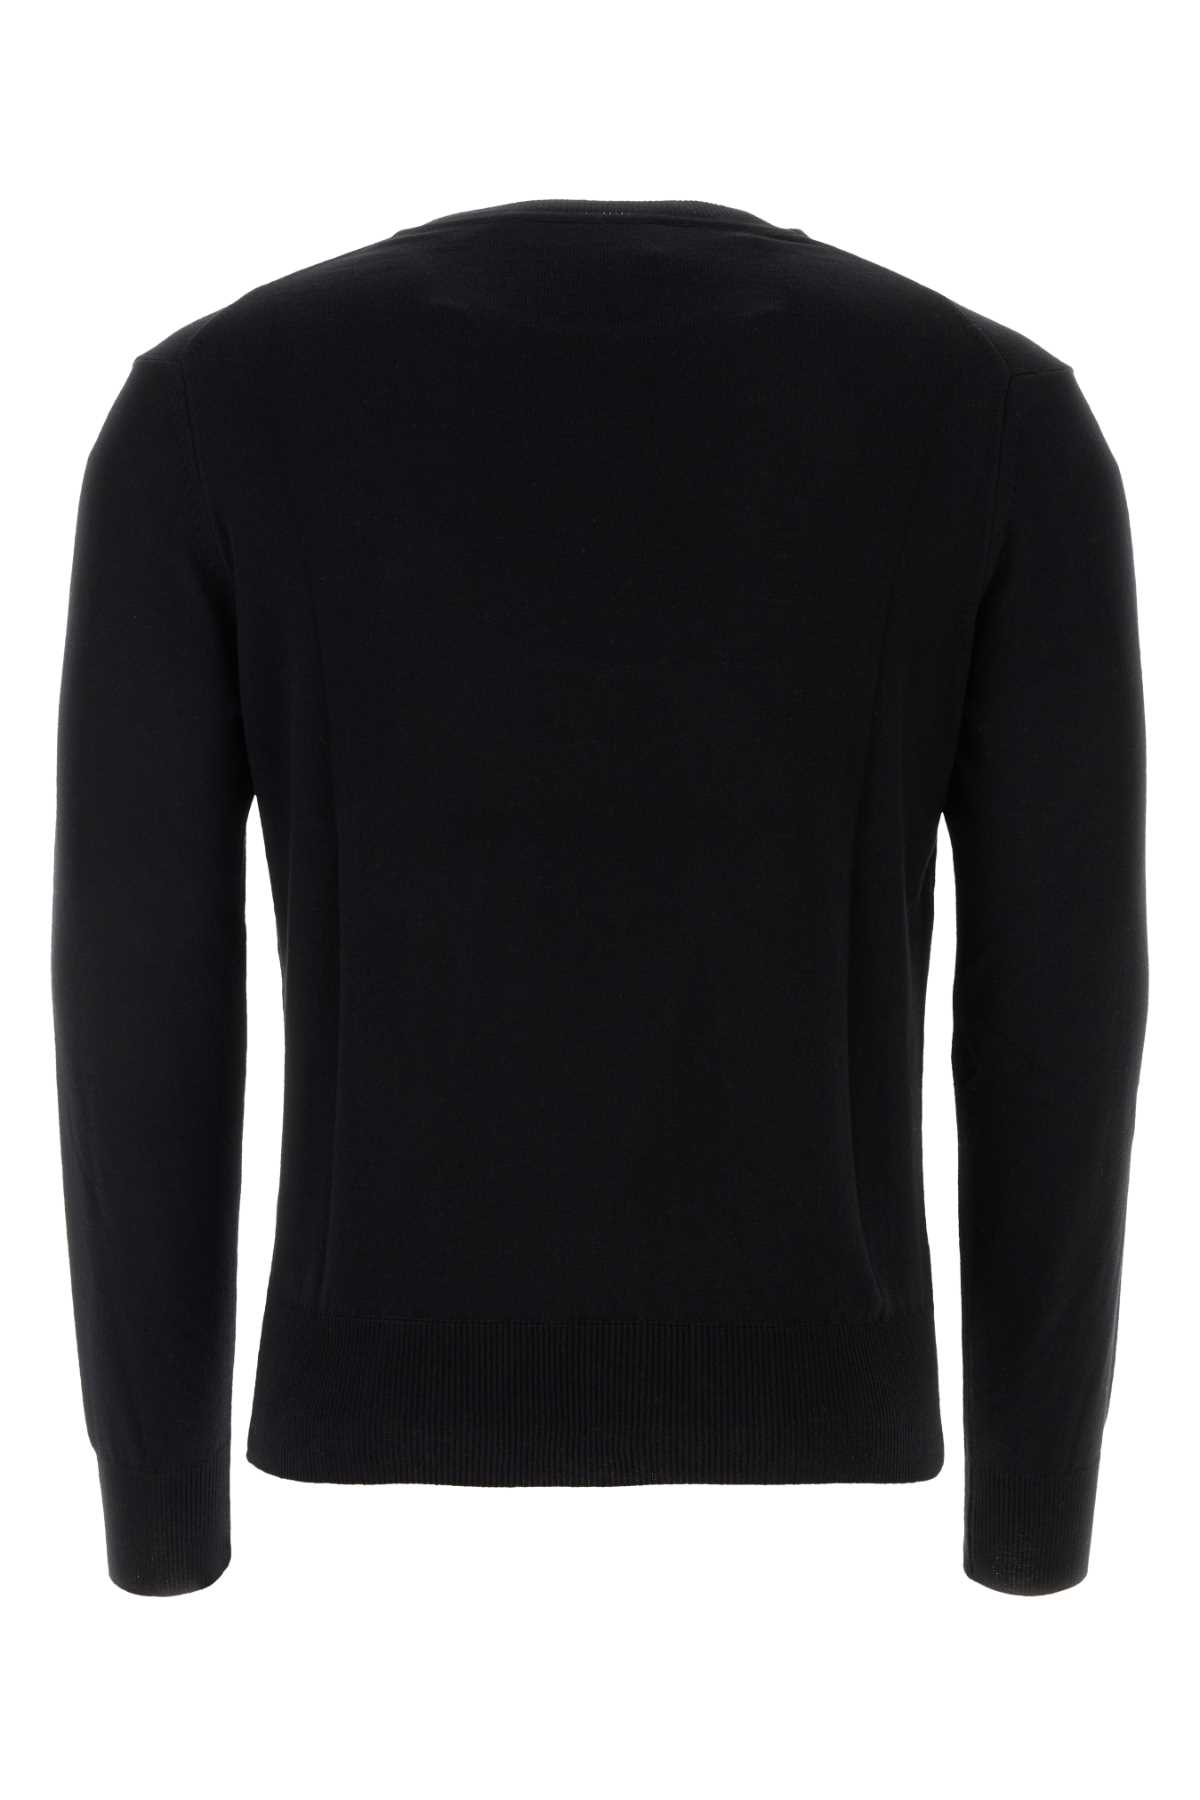 Vivienne Westwood Black Cotton Blend Sweater